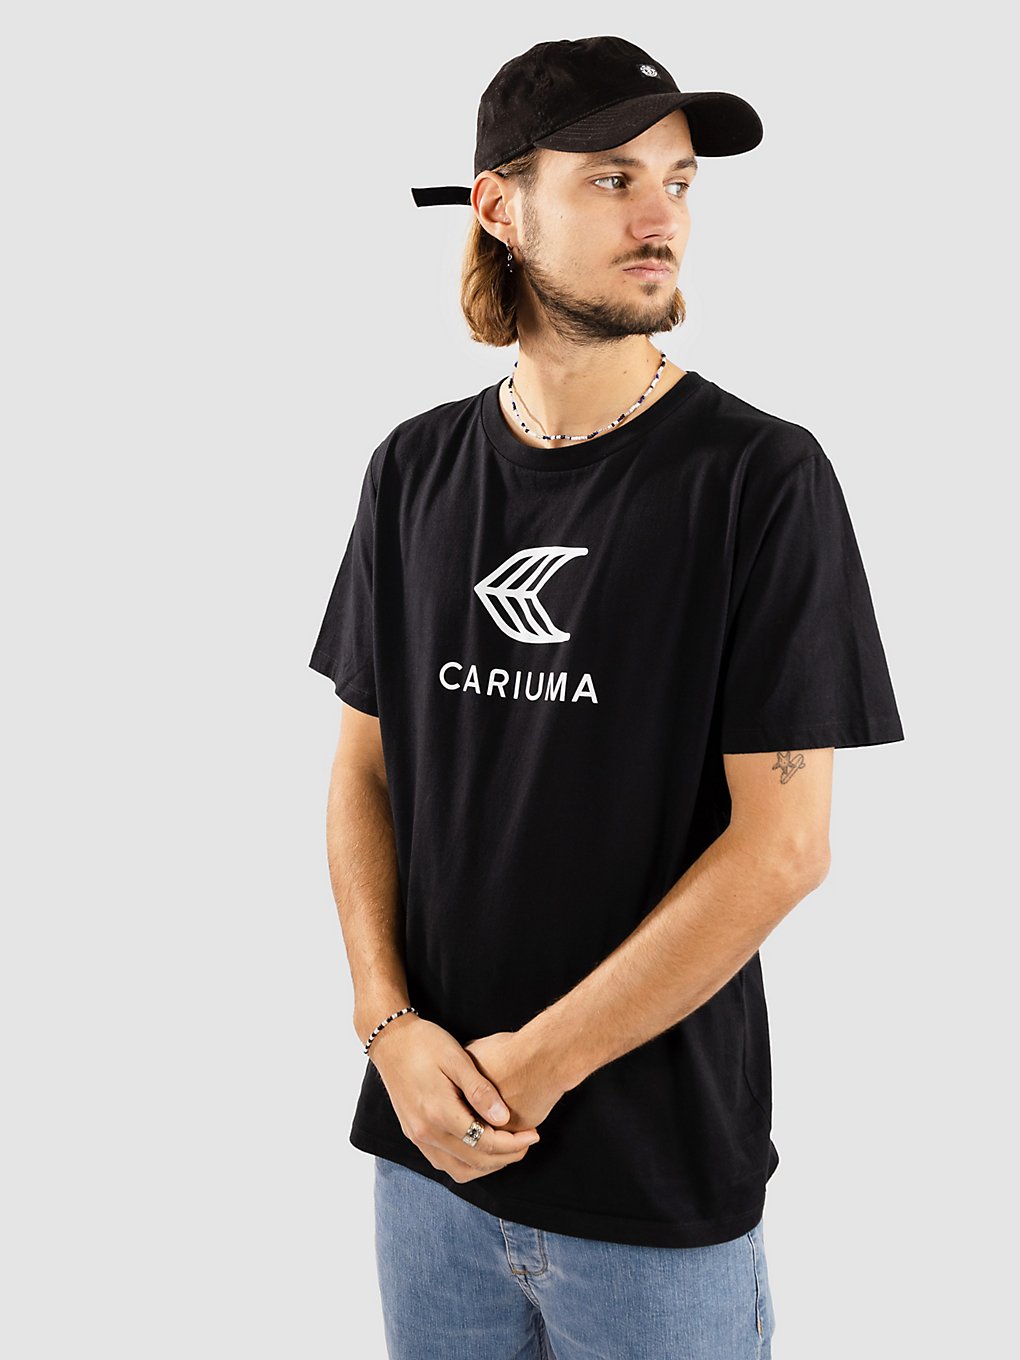 Cariuma Logo T-Shirt black kaufen